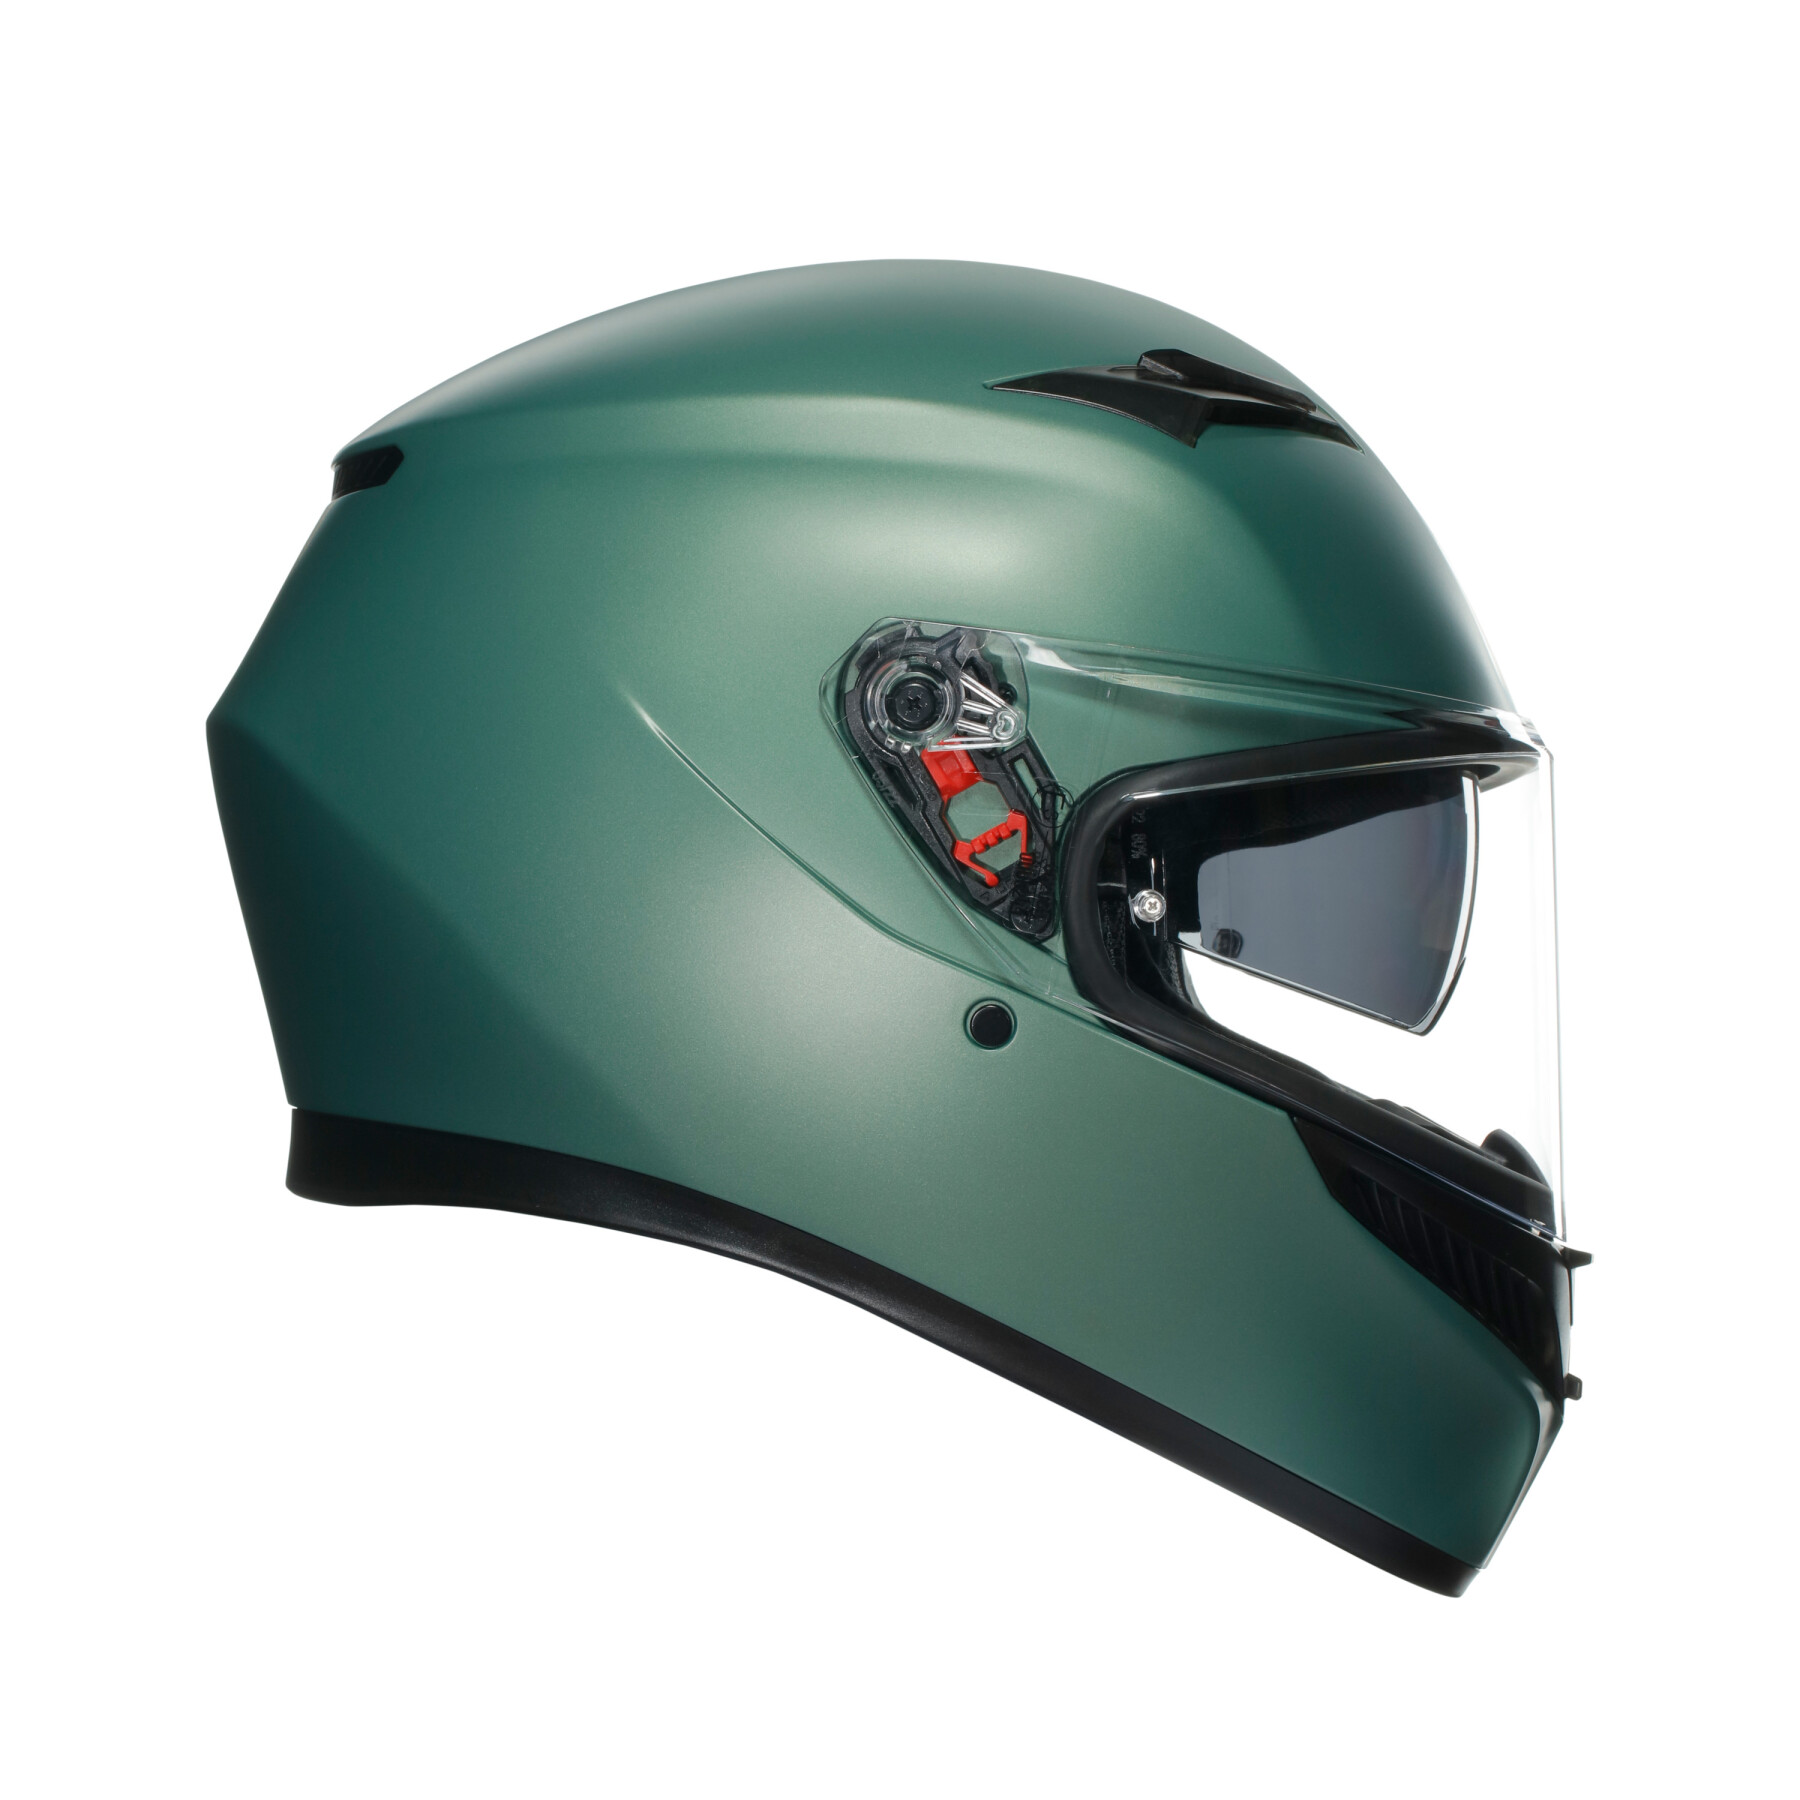 Full face motorcycle helmet AGV K3 Mono Matt Salvia